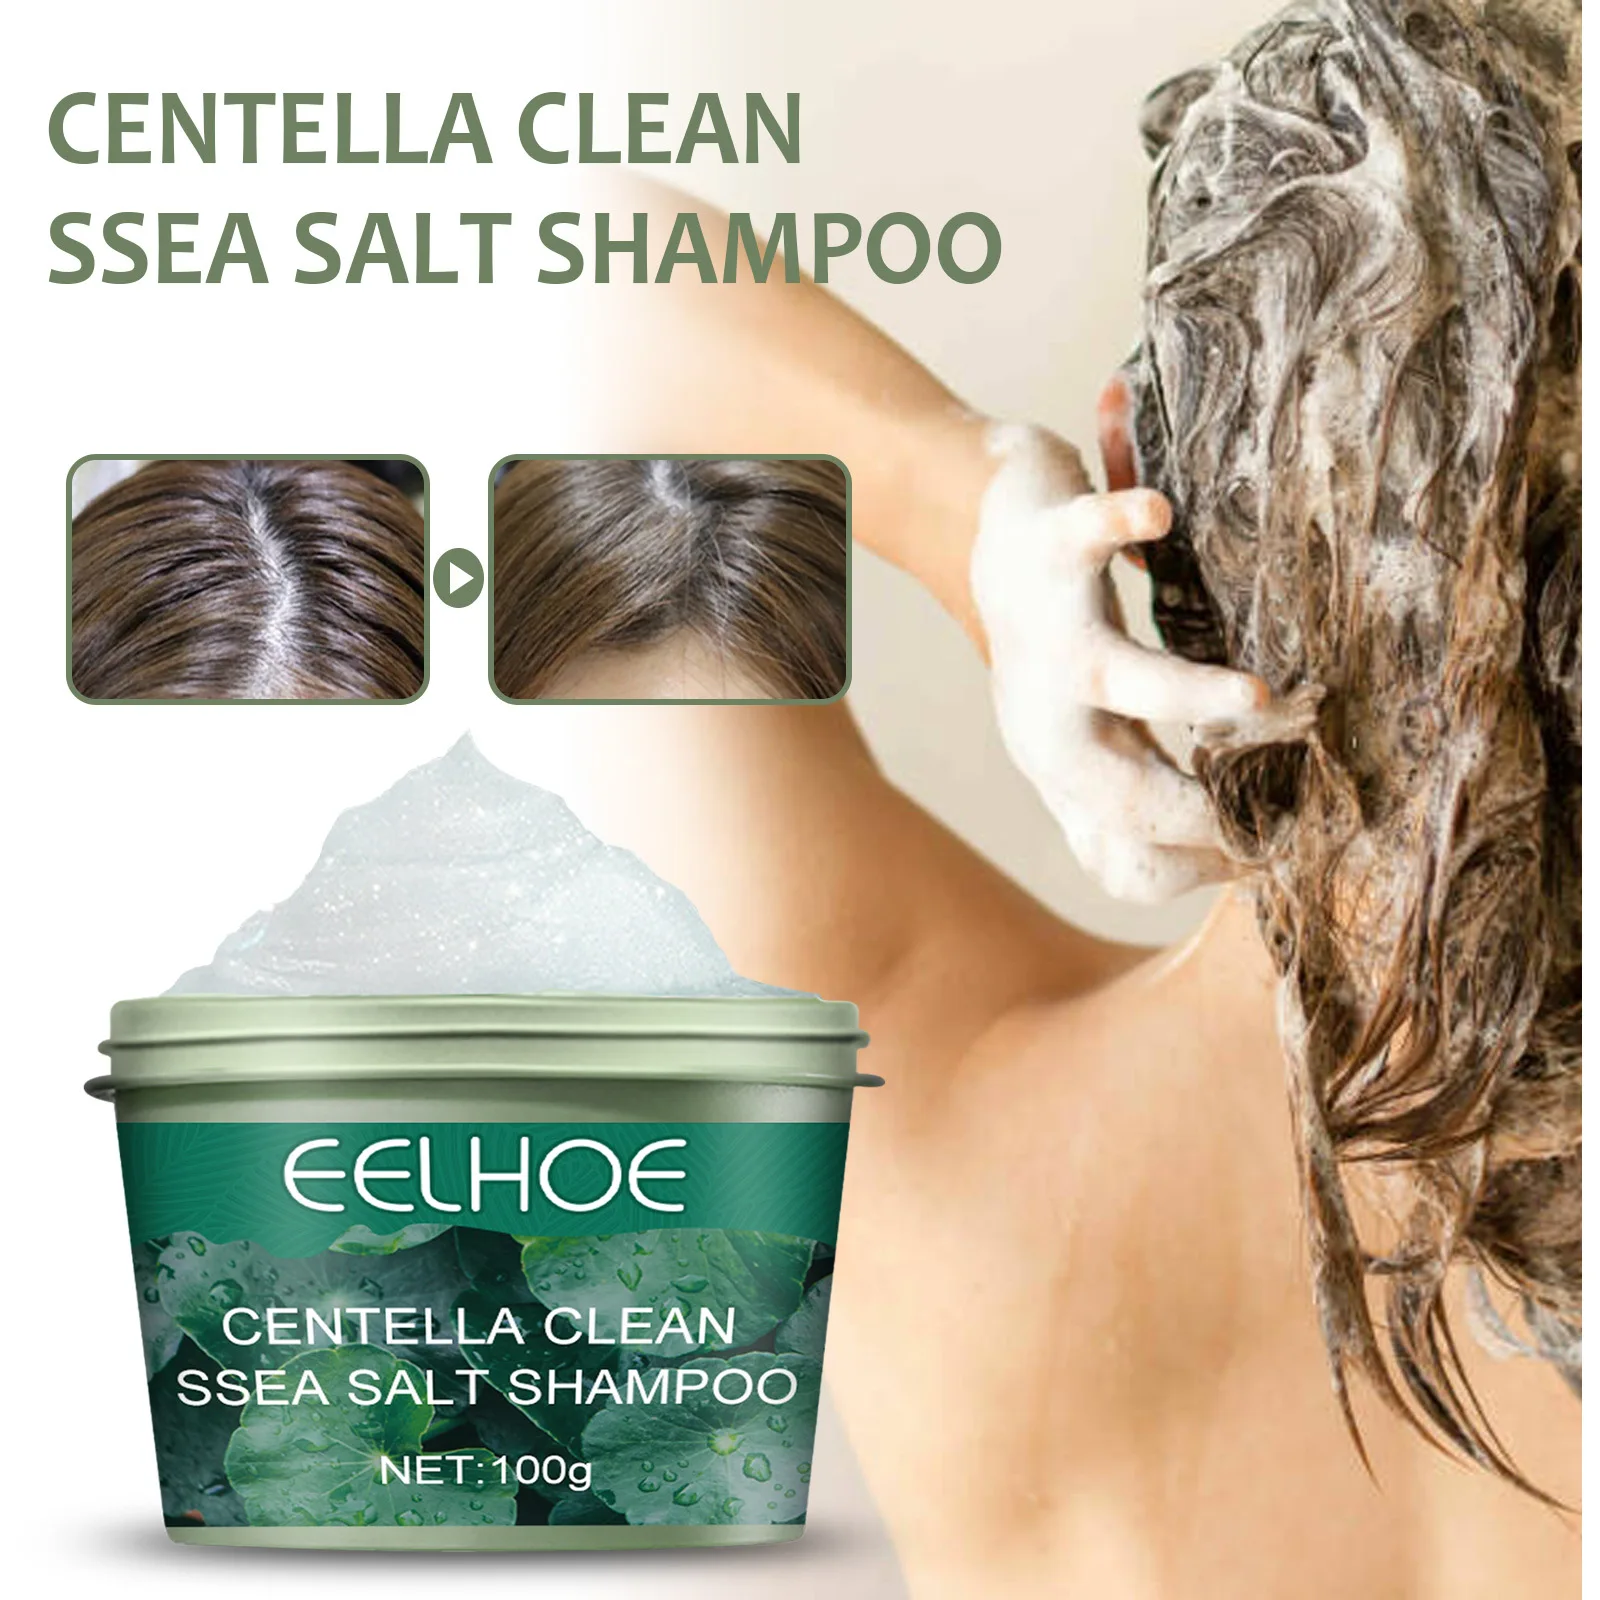 

Centella Clean Sea Salt Shampoo Deep Cleansing Dirt Anti-Dandruff Oil Control Anti-Itch Moisturizes Purify Scalp Mild Fuffy Hair